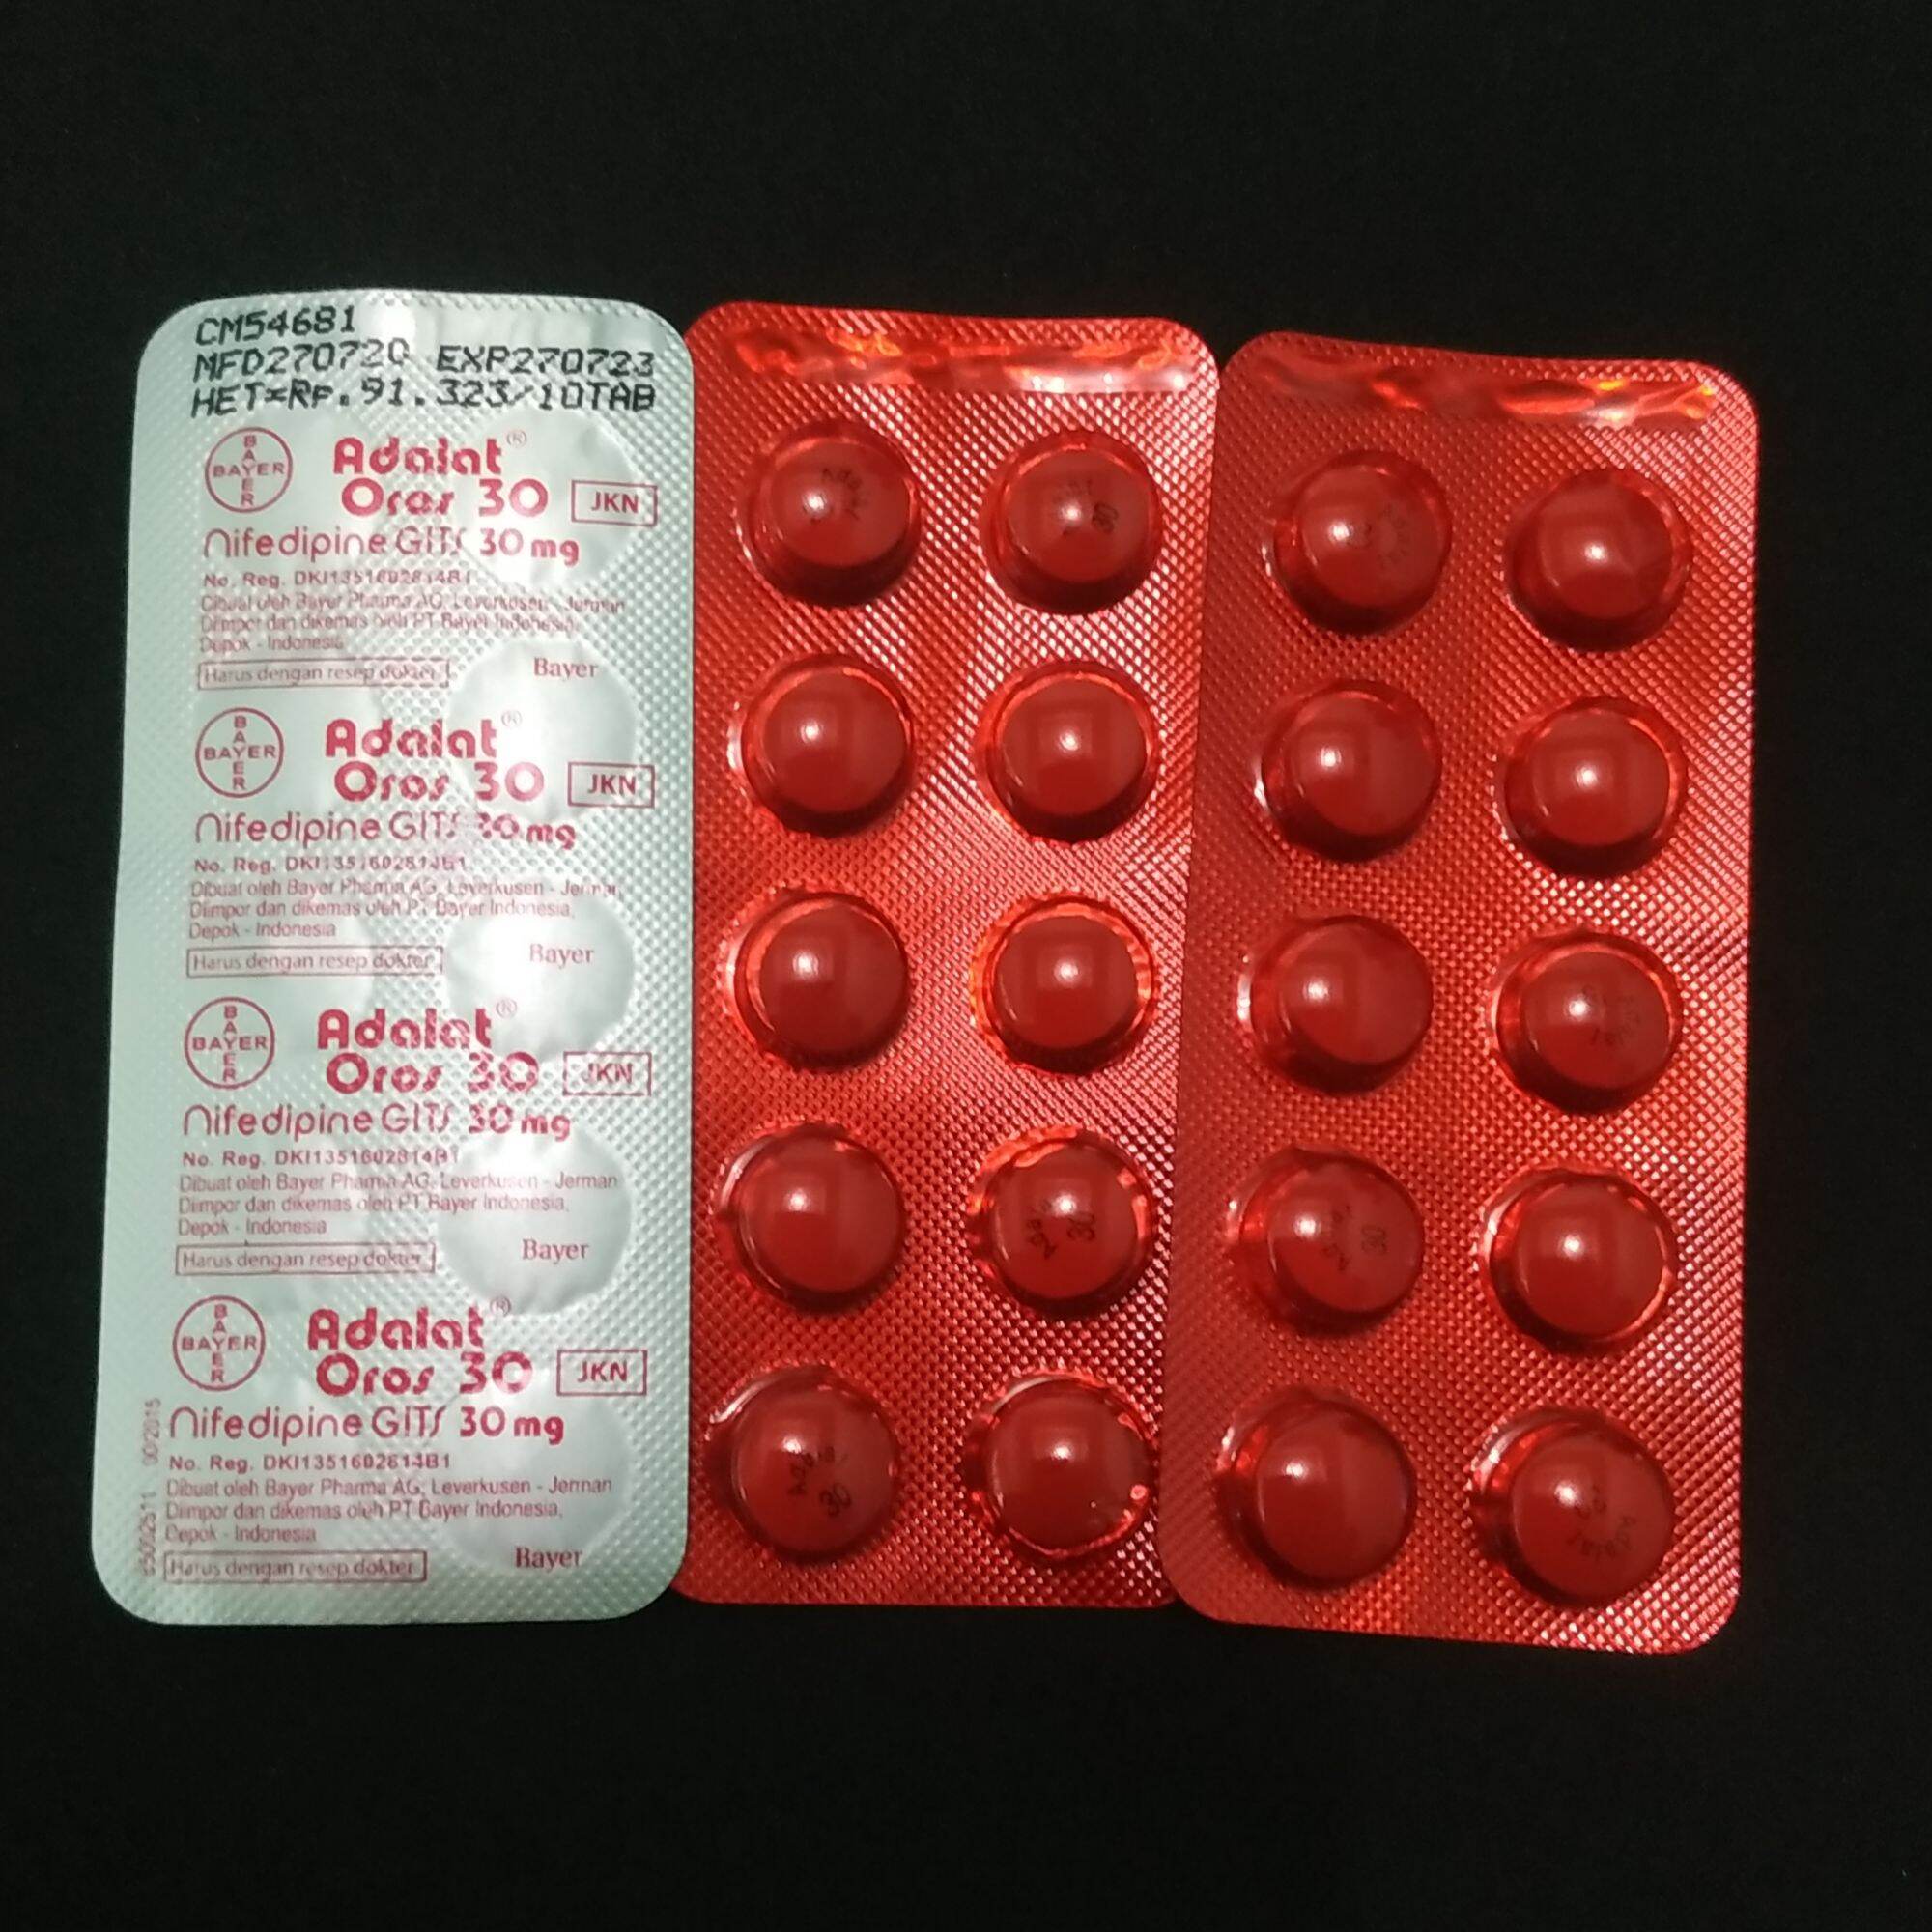 Adalat oros 30 mg obat apa